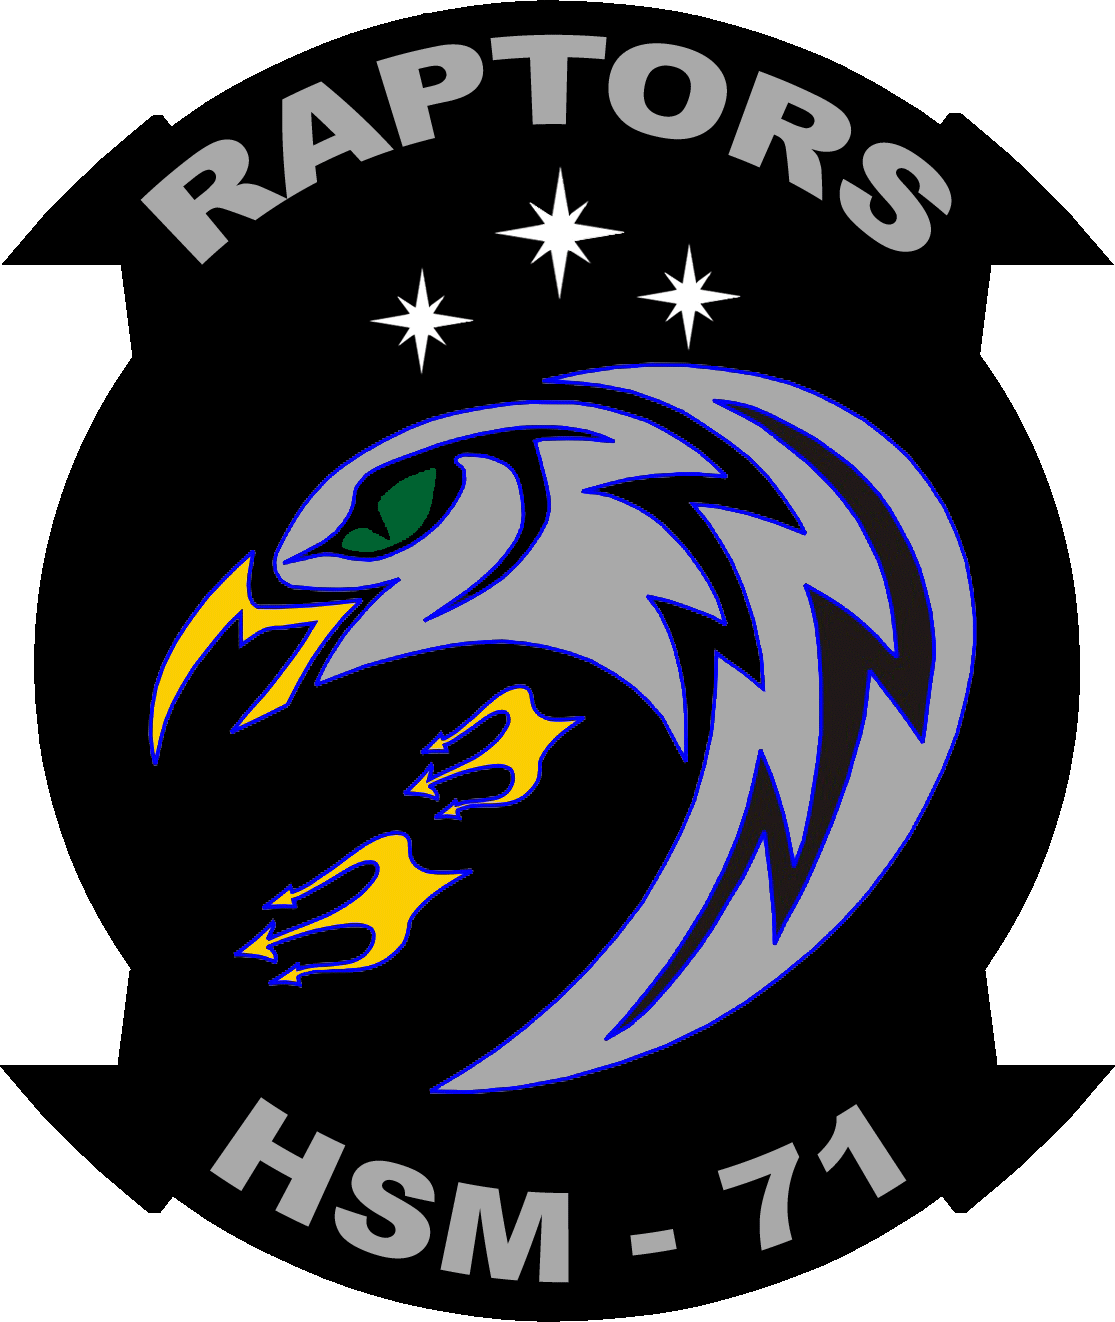 Hsm 71 Raptors (1115x1322)